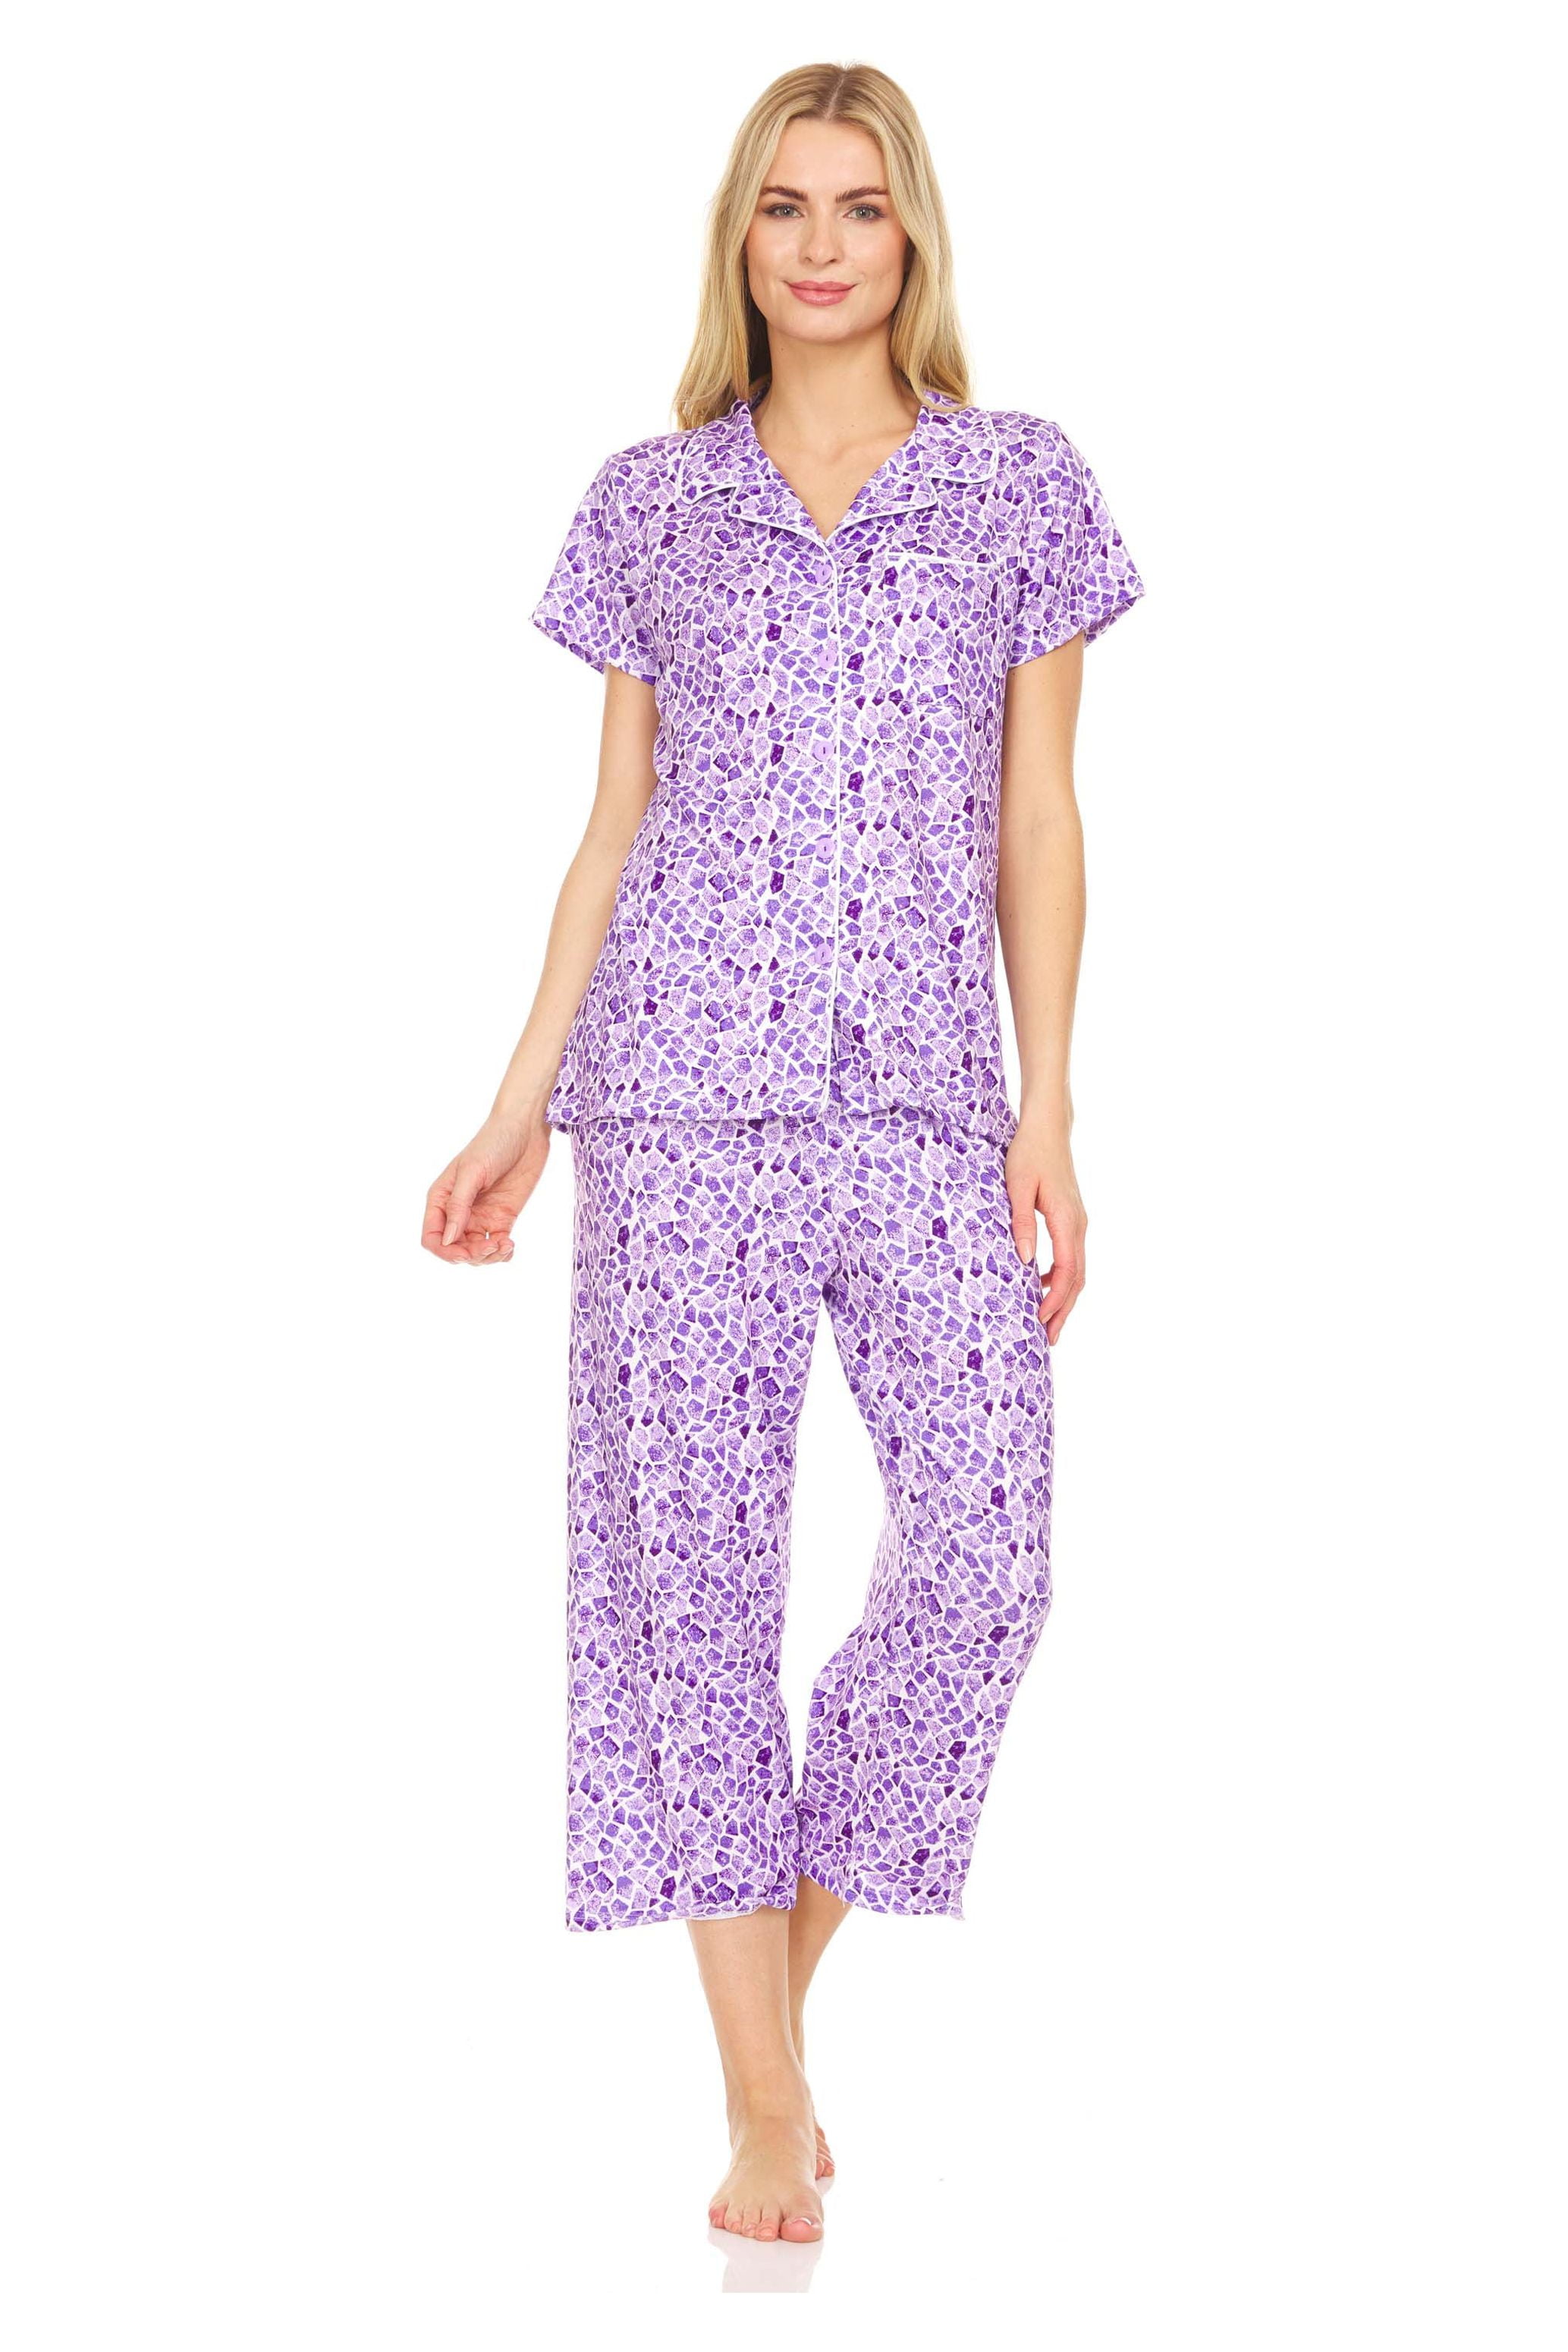 Lati Fashion Women Pajamas Set Capri and Button Down Top Short Sleeve ...